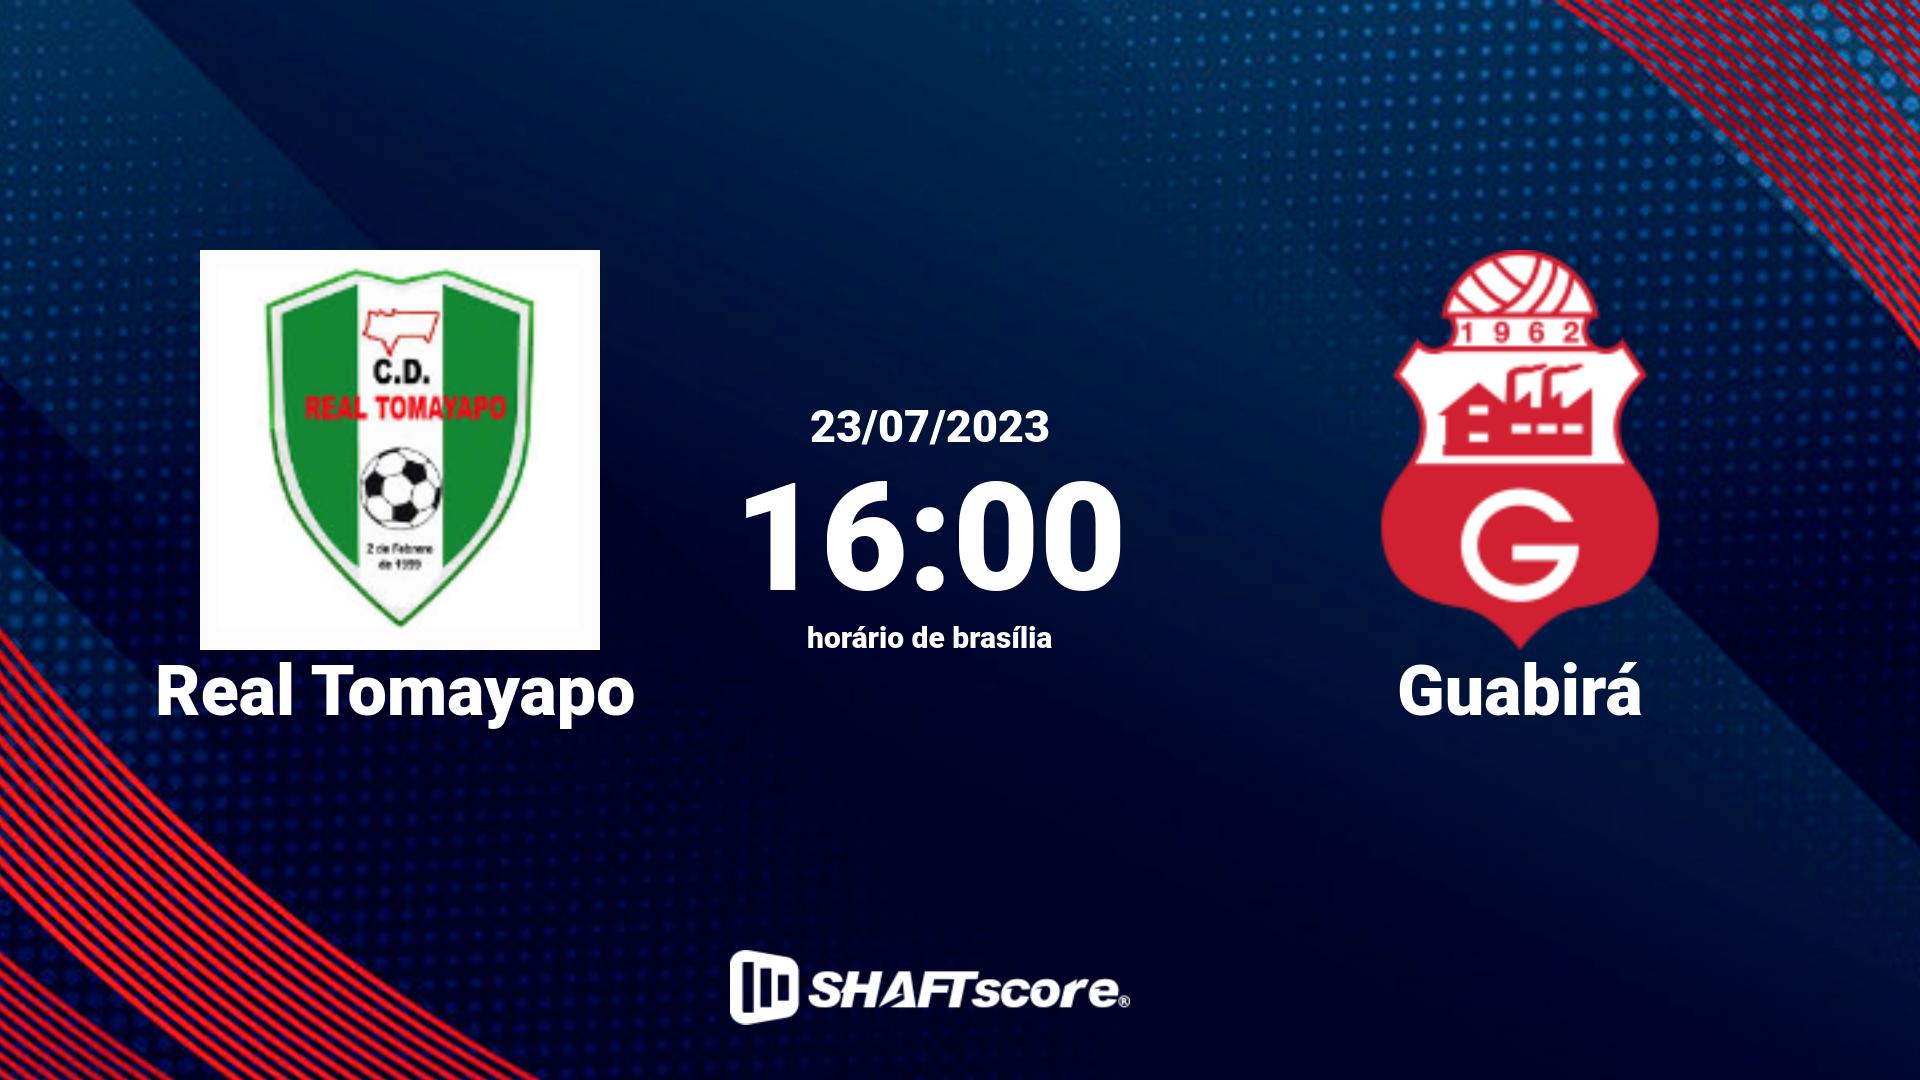 Estatísticas do jogo Real Tomayapo vs Guabirá 23.07 16:00